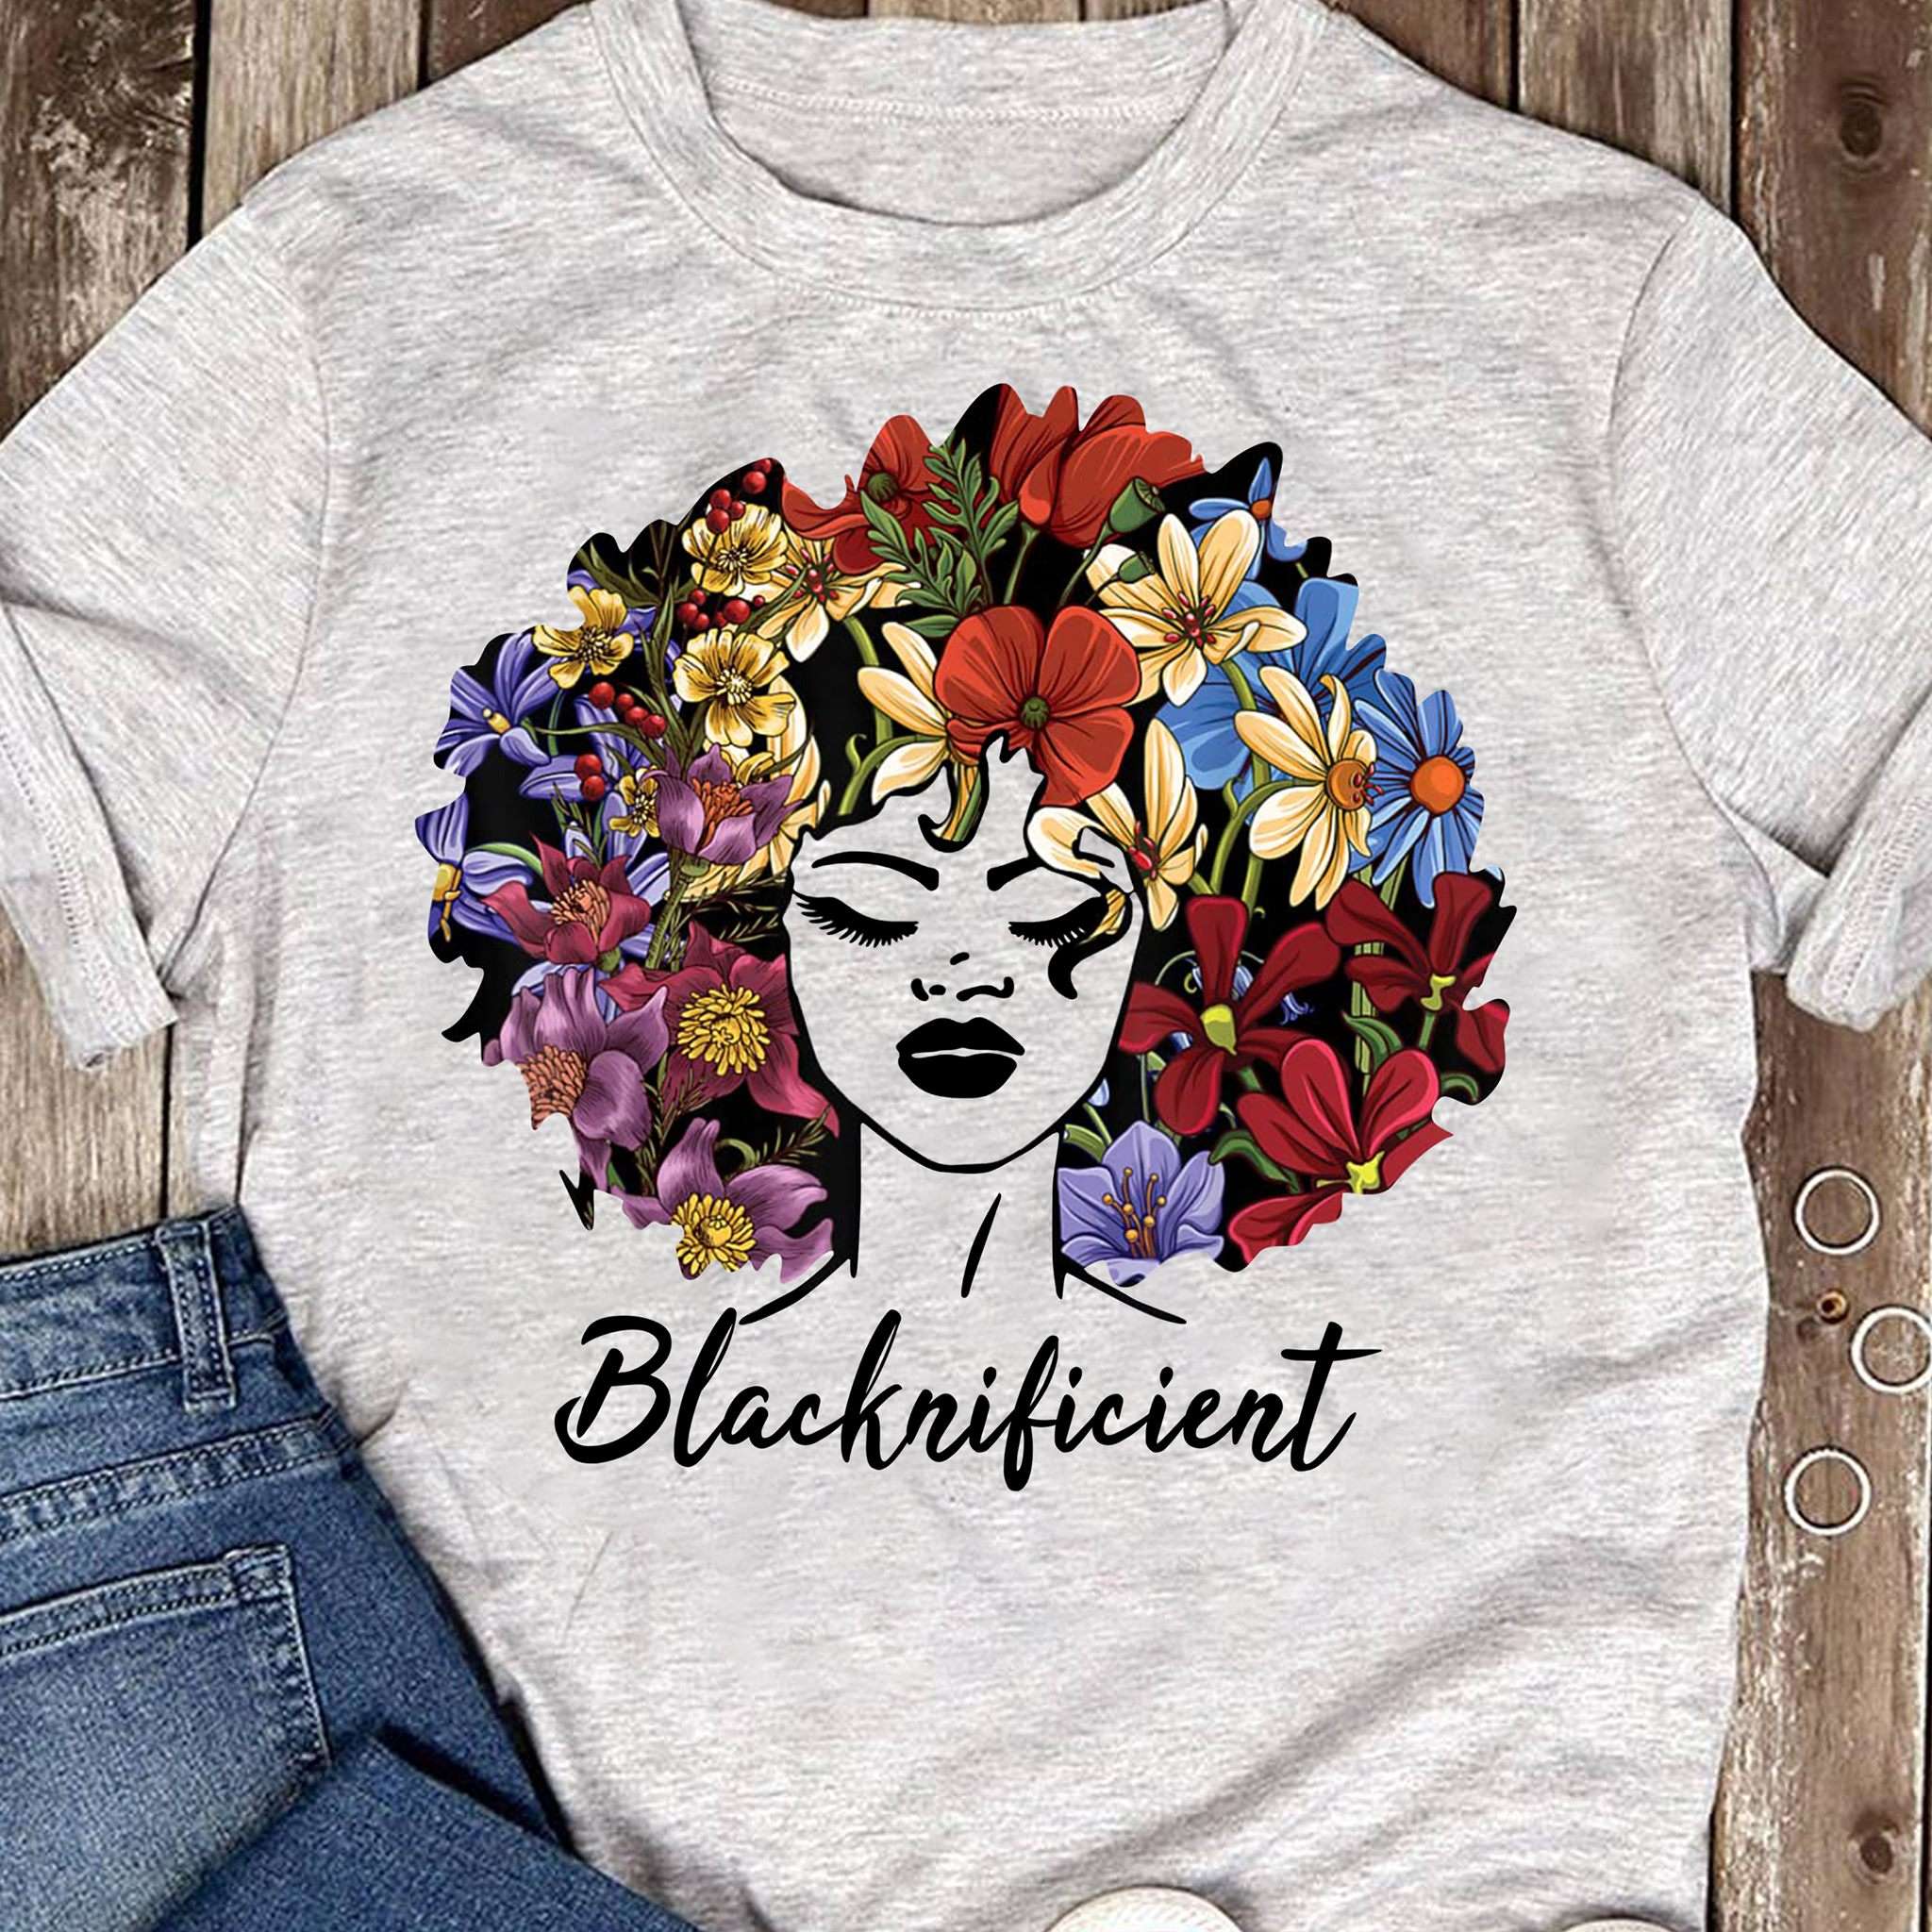 Blacknificient women - Beautiful black women, floral black women